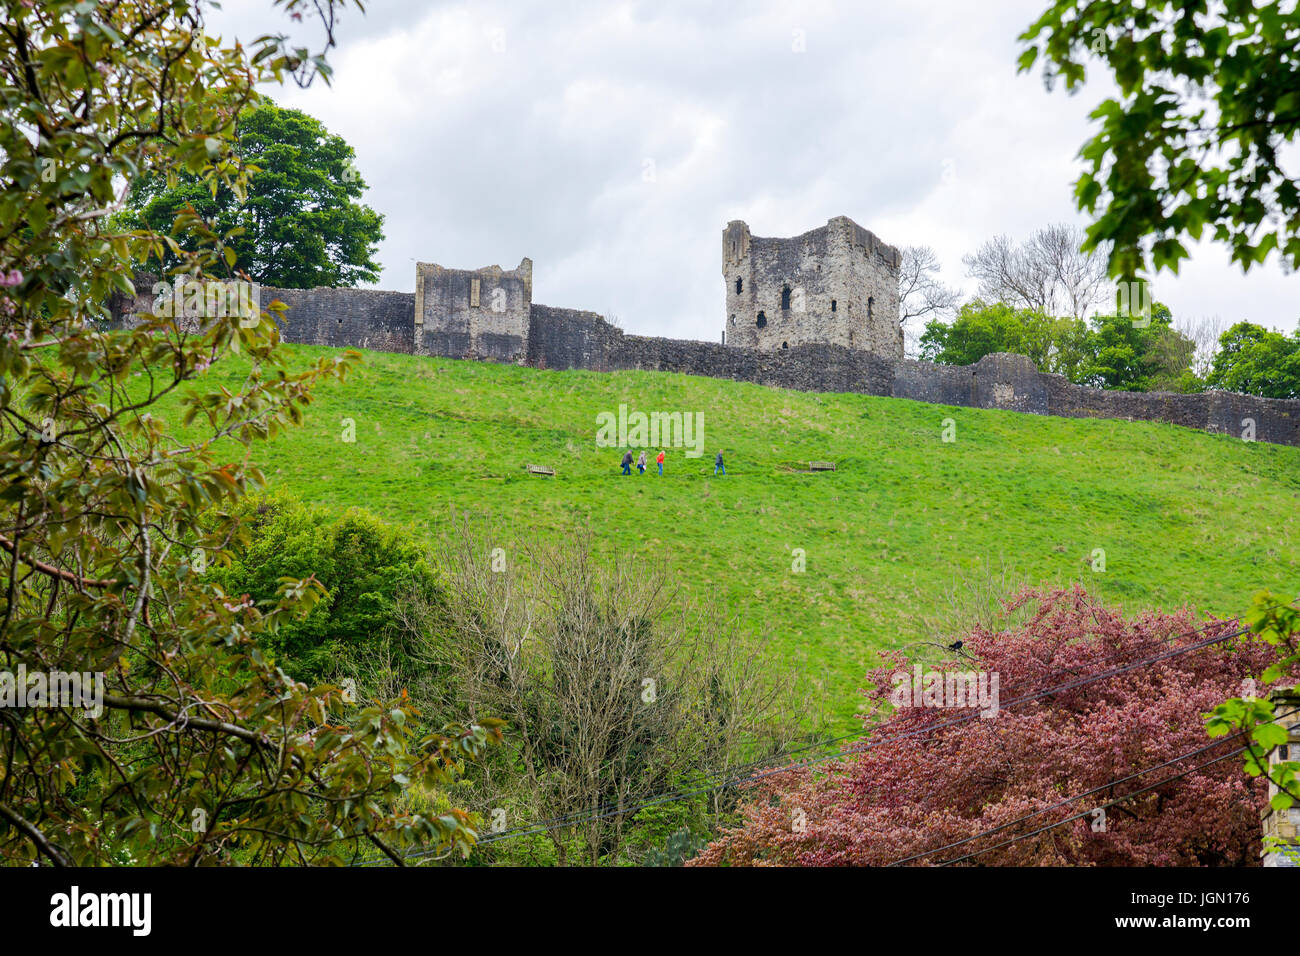 Peveril Castle has a commanding position overlooking the village of Castleton, Peak District, Derbyshire, England, UK Stock Photo